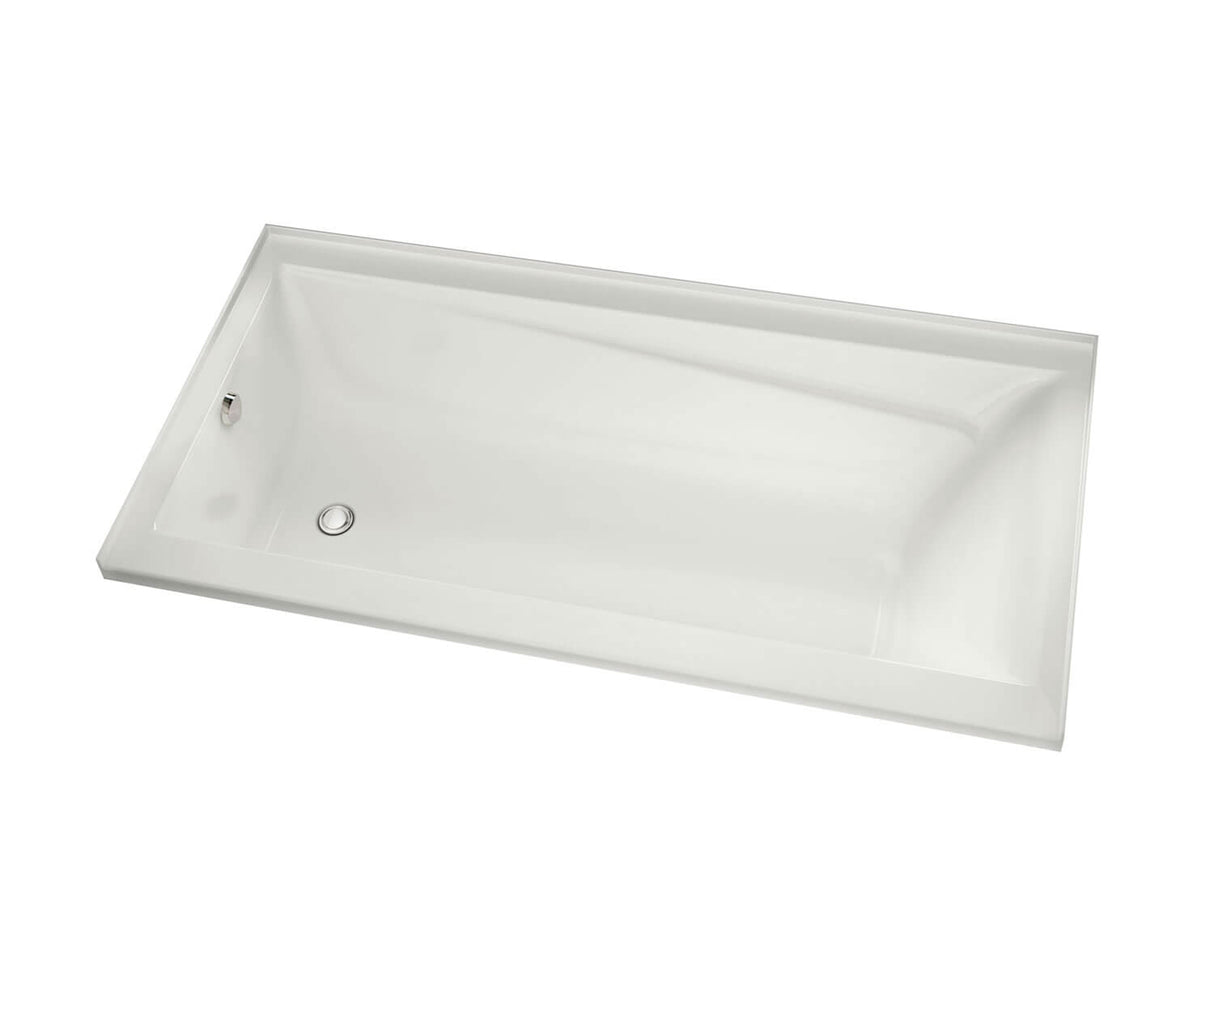 MAAX 106224-000-001-001 Exhibit 7232 IF Acrylic Alcove Left-Hand Drain Bathtub in White